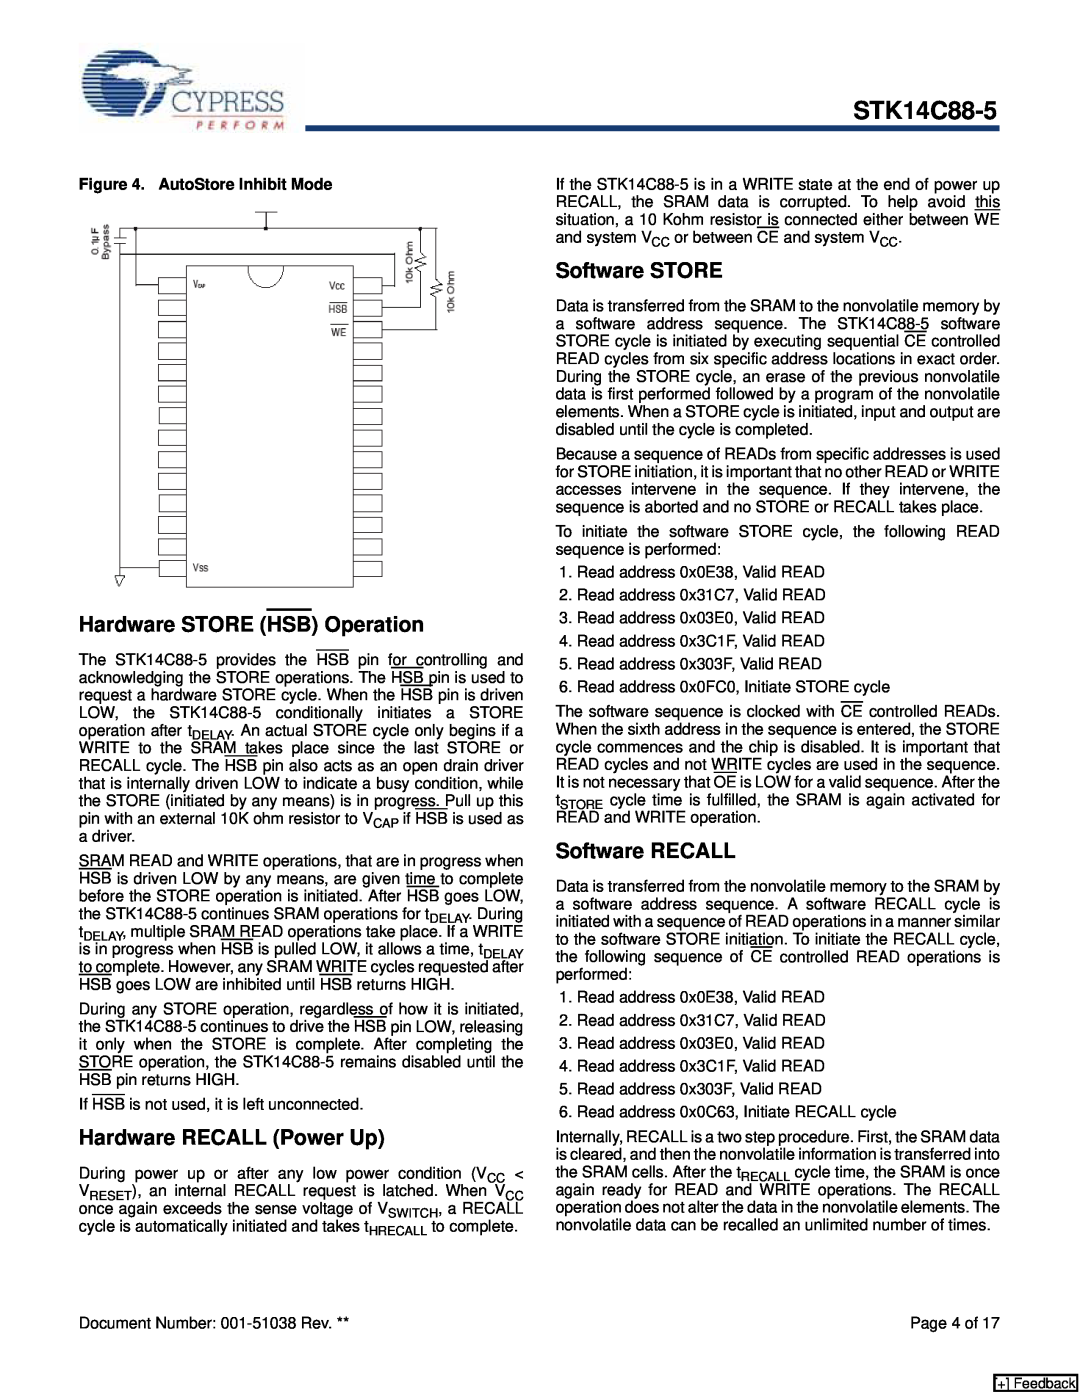 Cypress STK14C88-5 manual Hardware STORE HSB Operation, Hardware RECALL Power Up, Software STORE, Software RECALL 